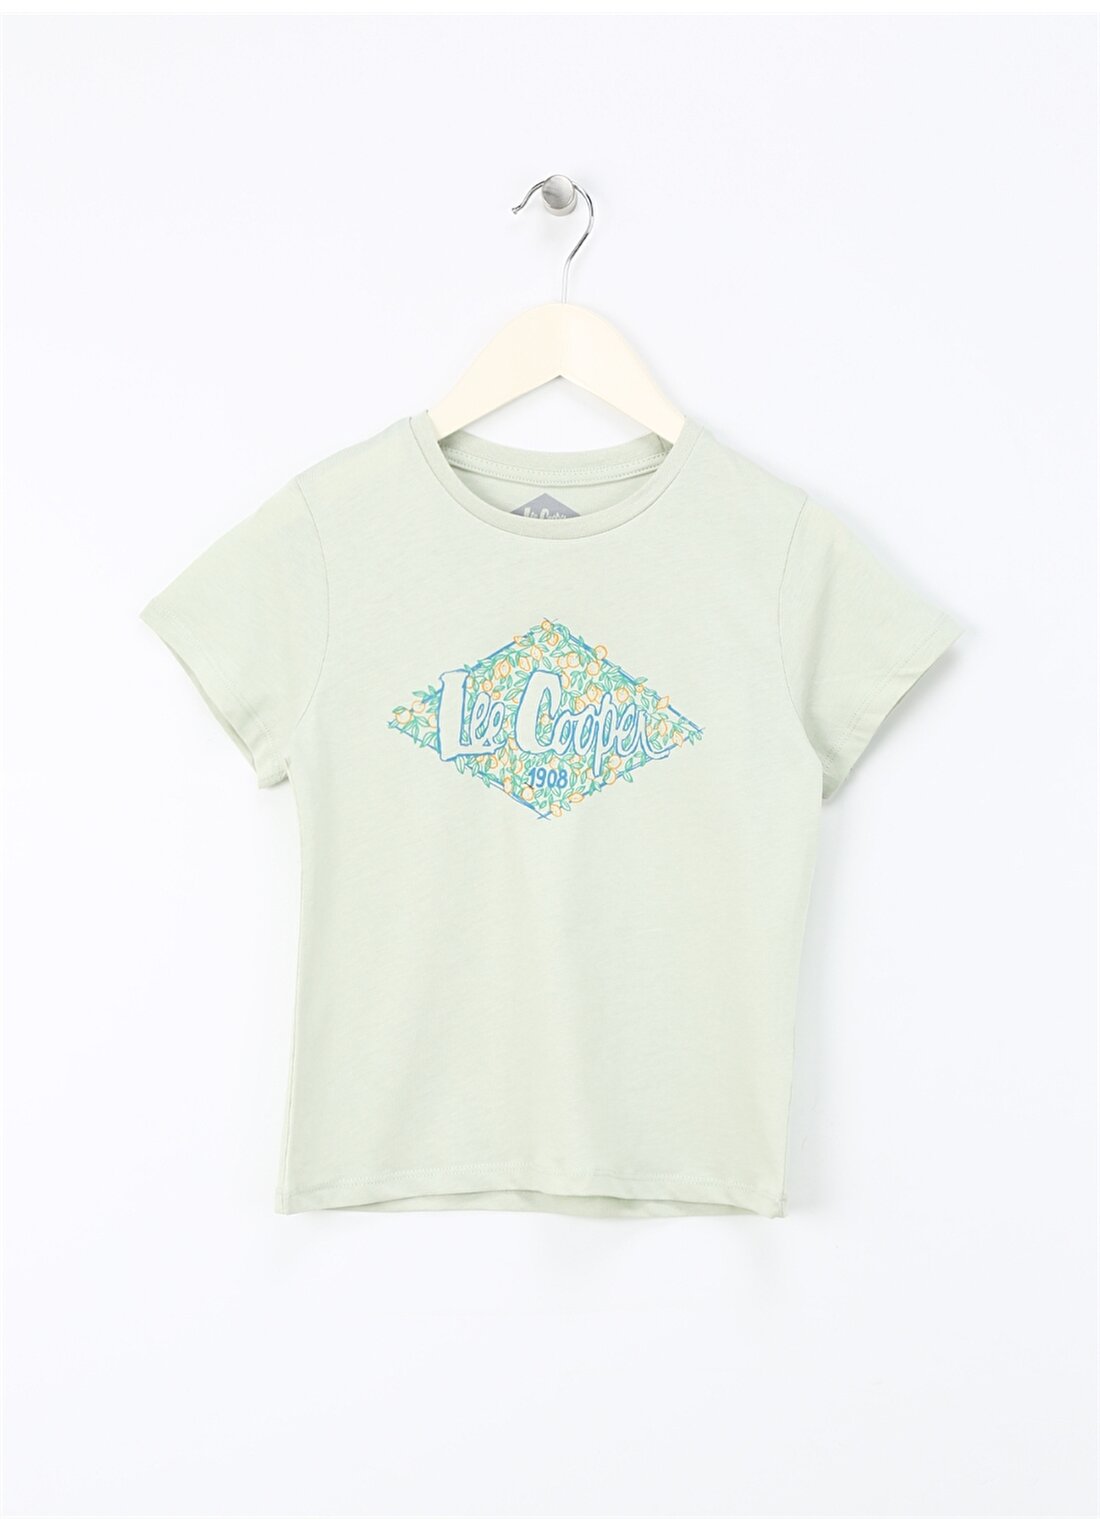 Lee Cooper Baskılı Mint Kız Çocuk T-Shirt 242 LCG 242003 FLOWERS MINT